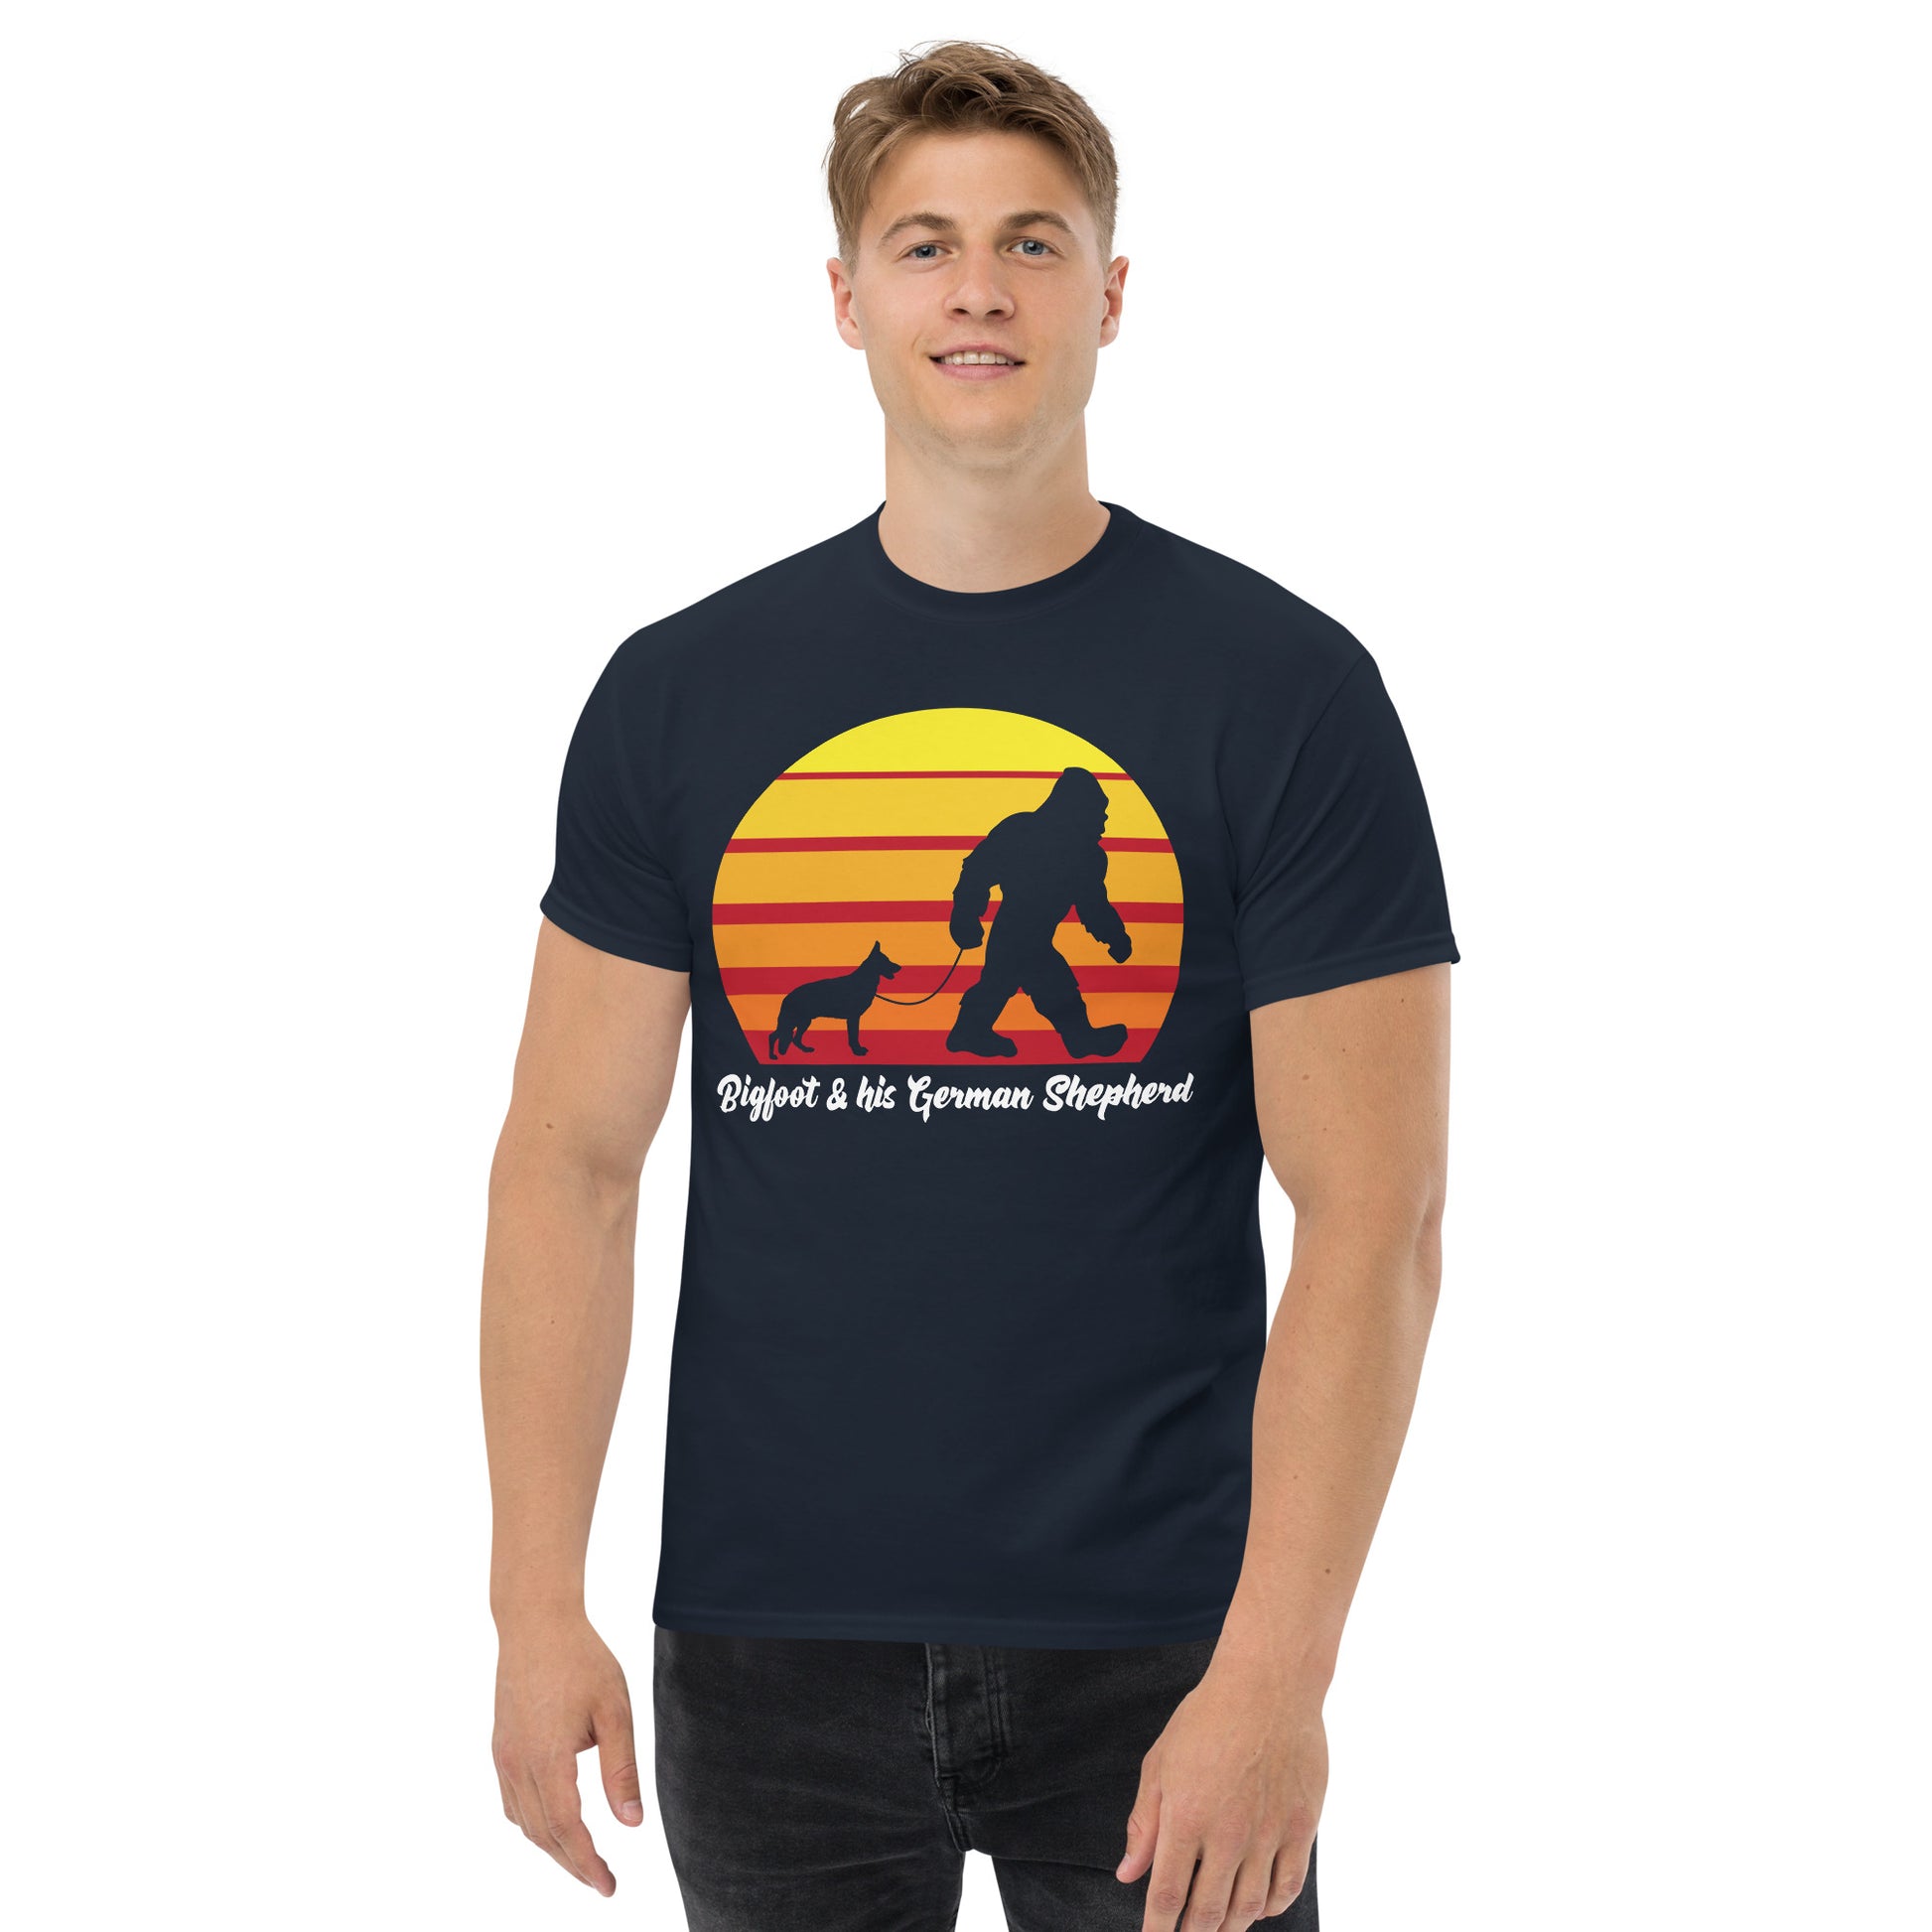 Bigfoot and his German Shepherd men’s navy t-shirt by Dog Artistry.